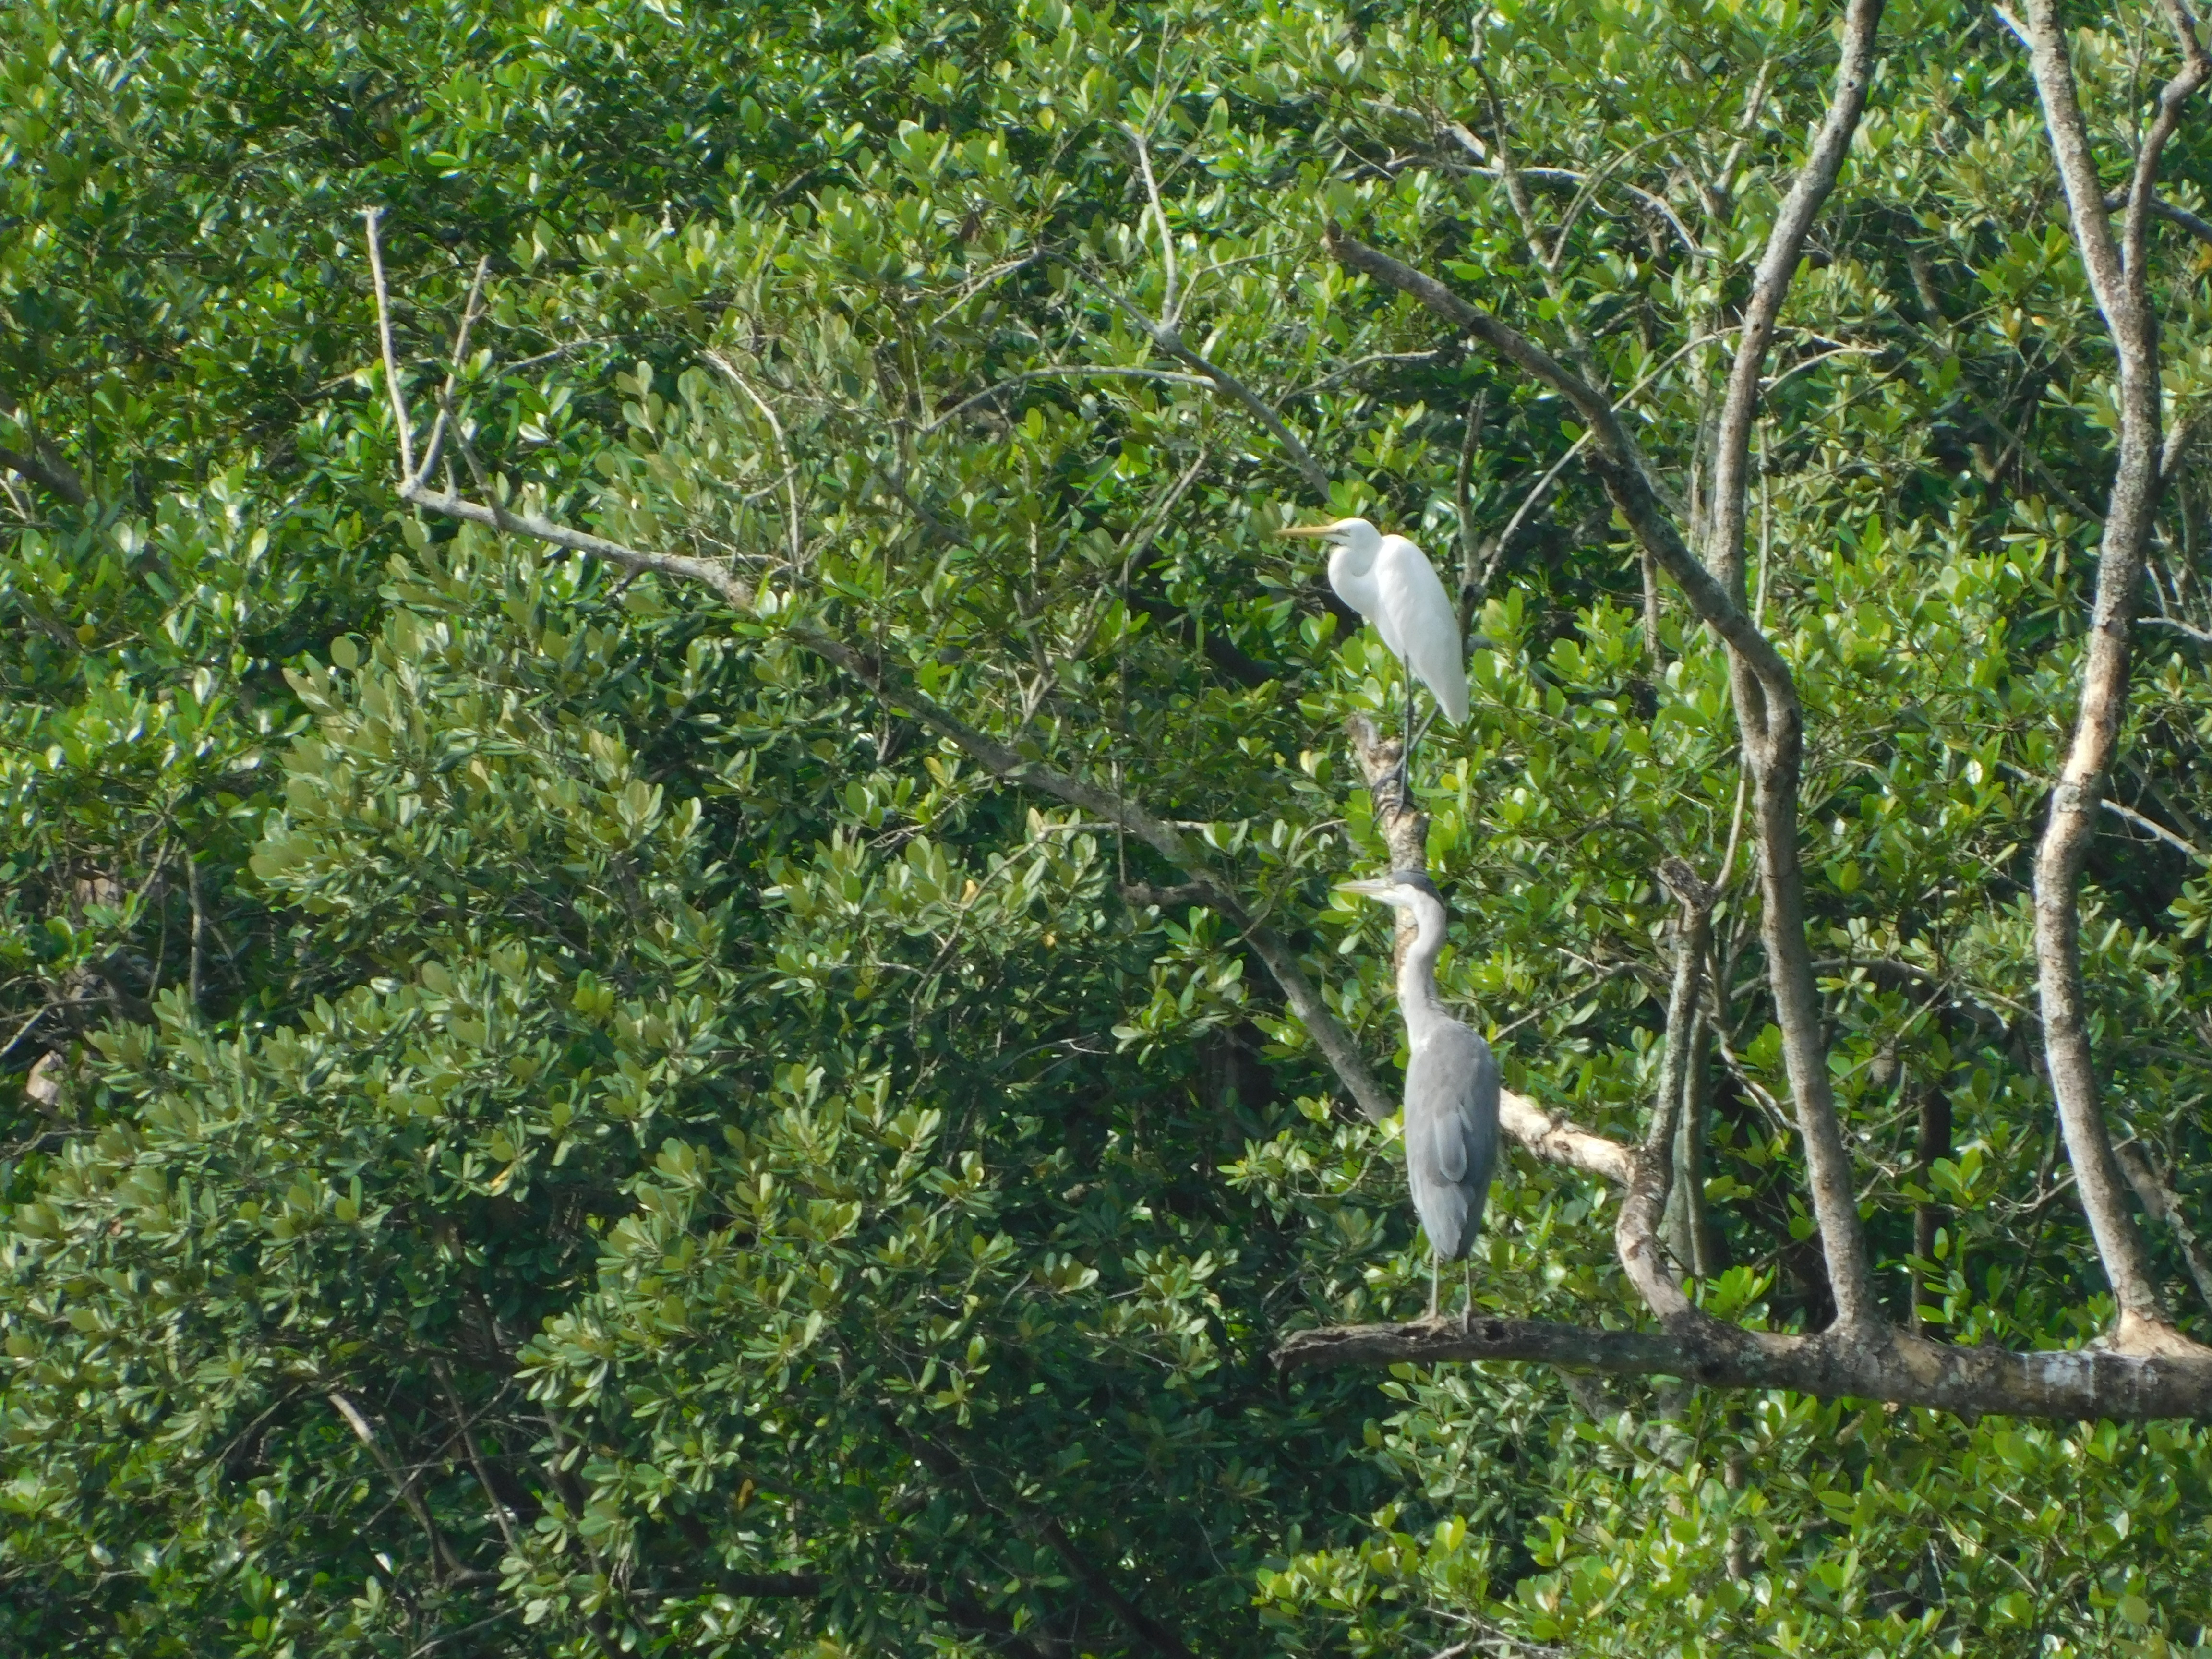 Intermediate egret and grey heron